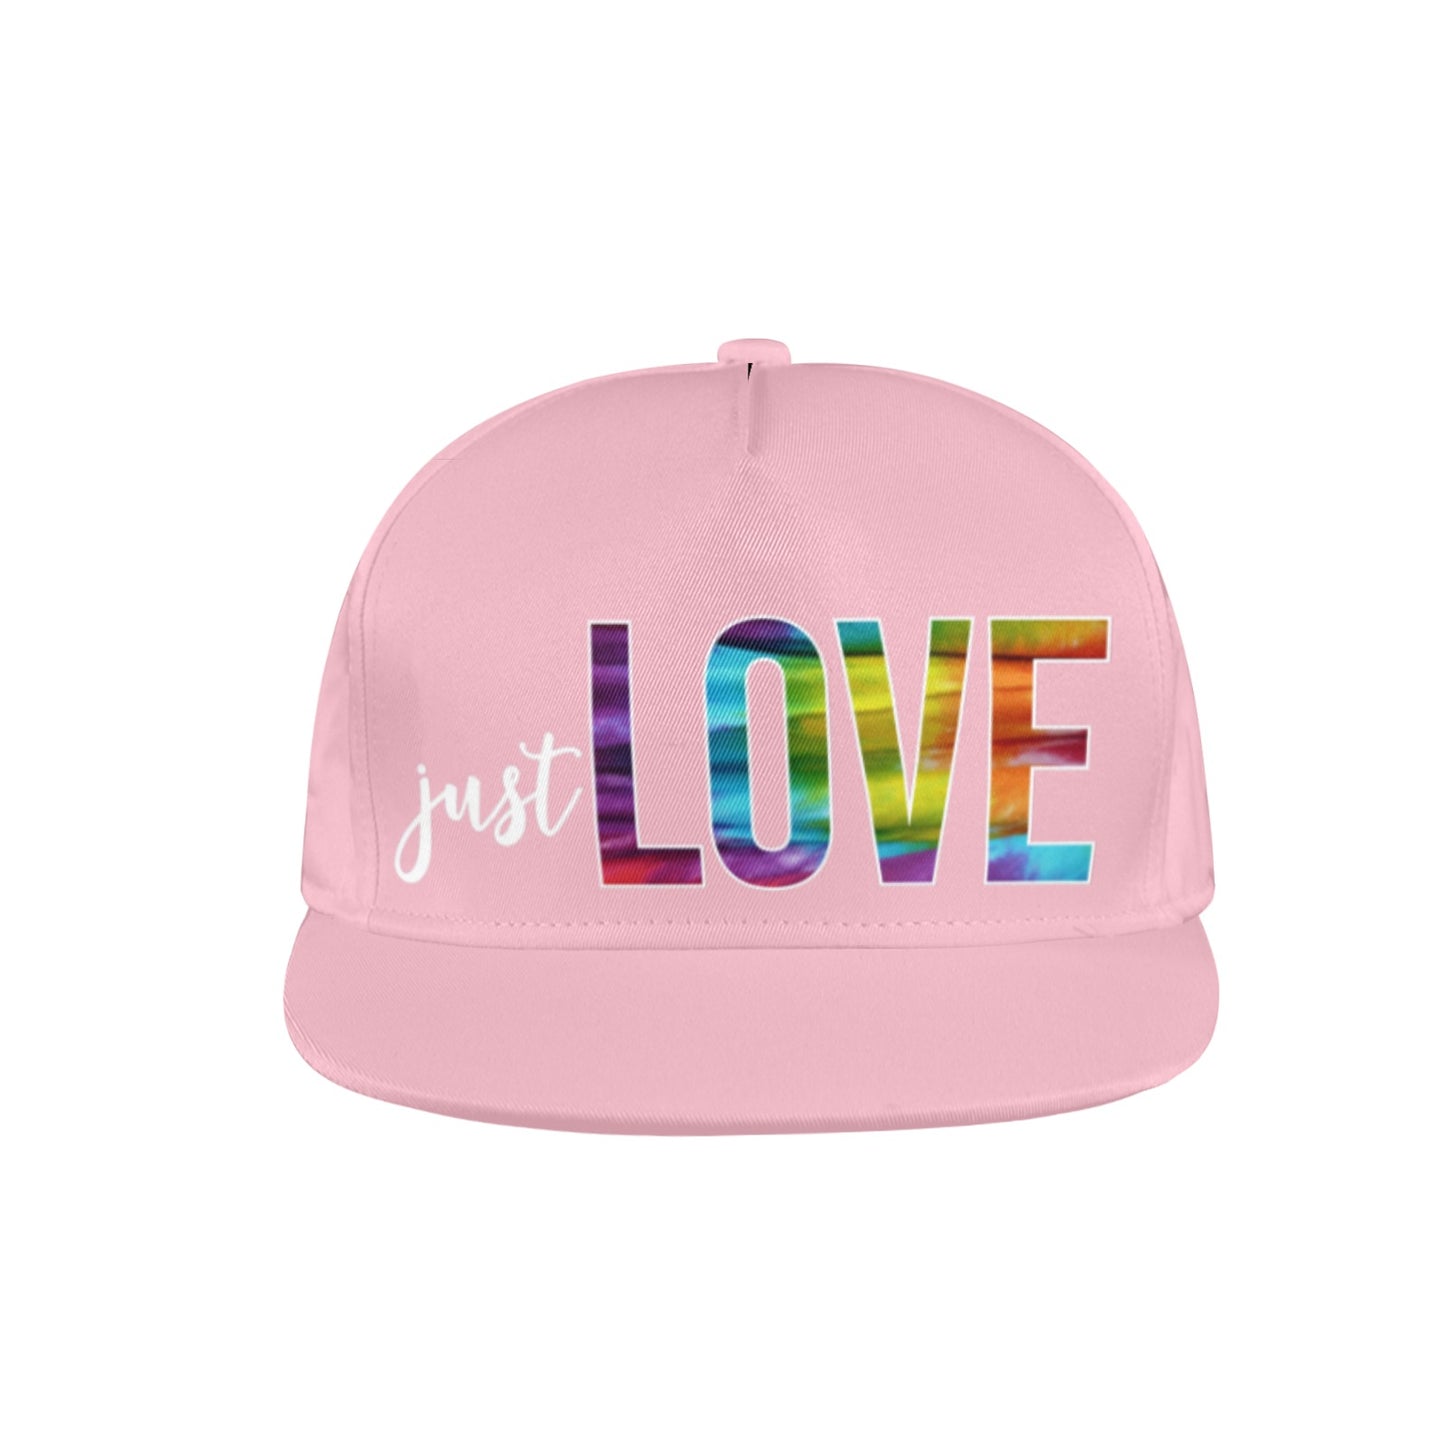 Just LOVE - Snapback Hats